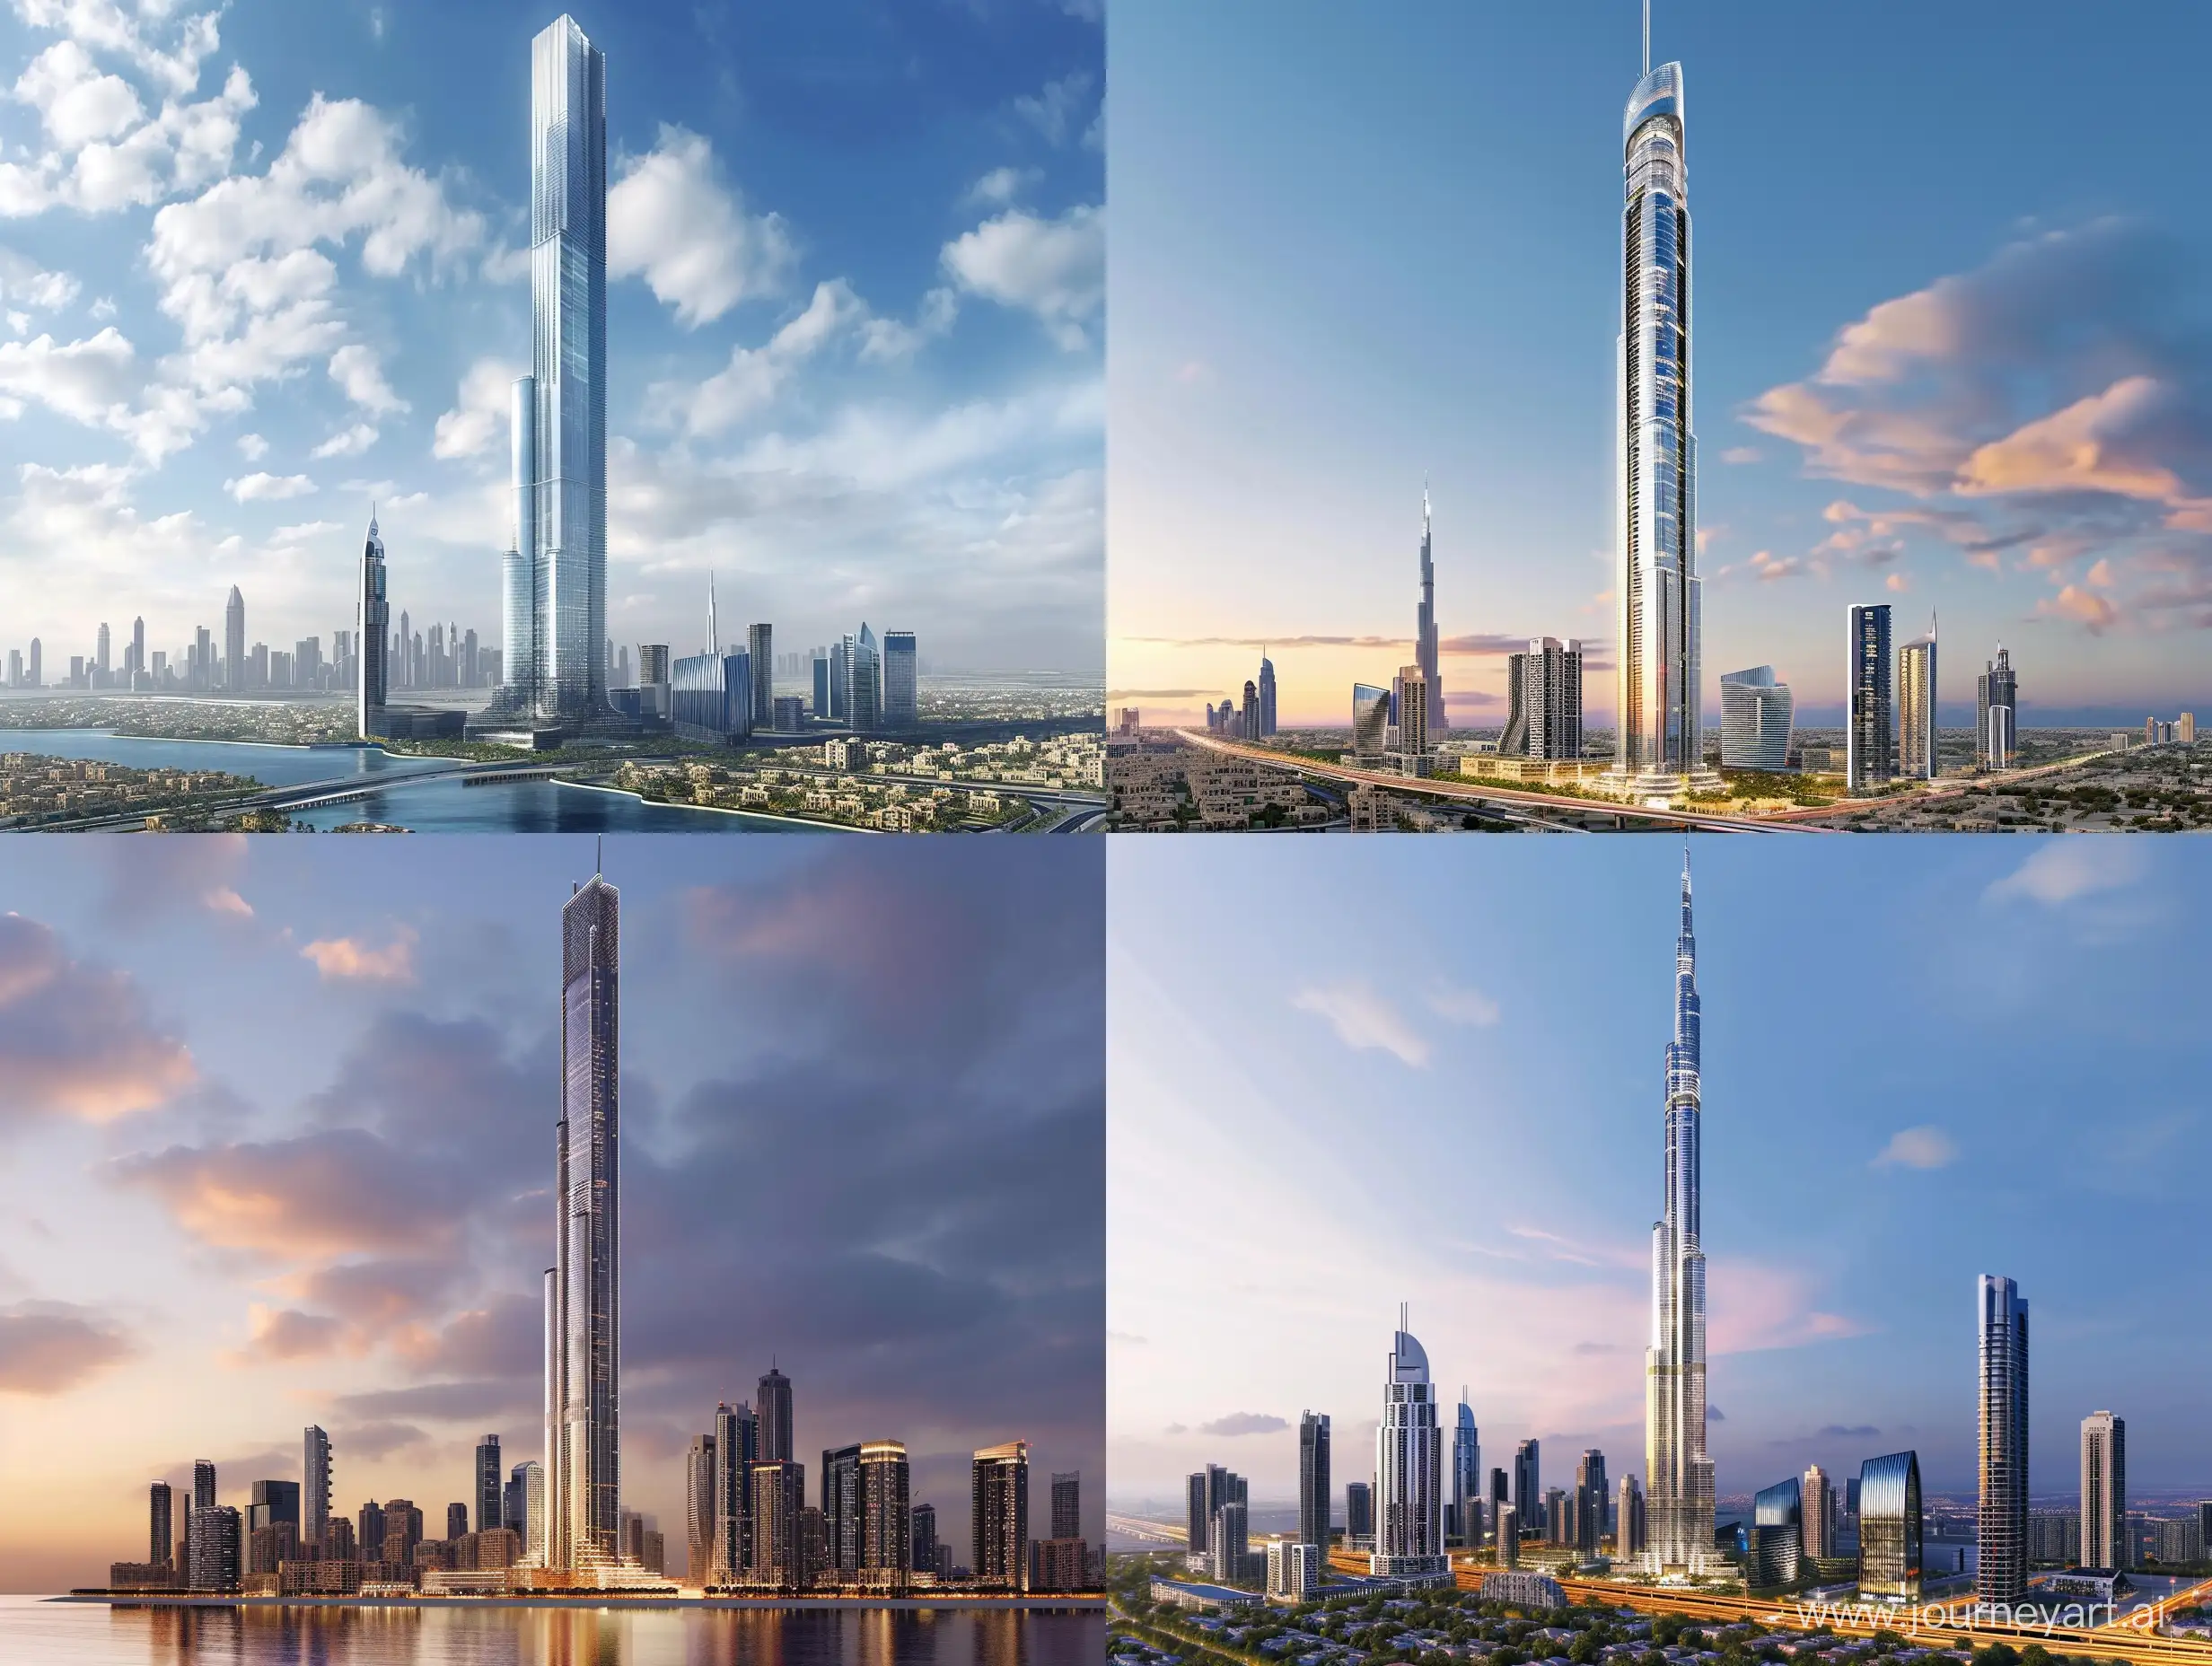 ItalianInspired-500Meter-Skyscraper-Dominates-Dubai-Skyline